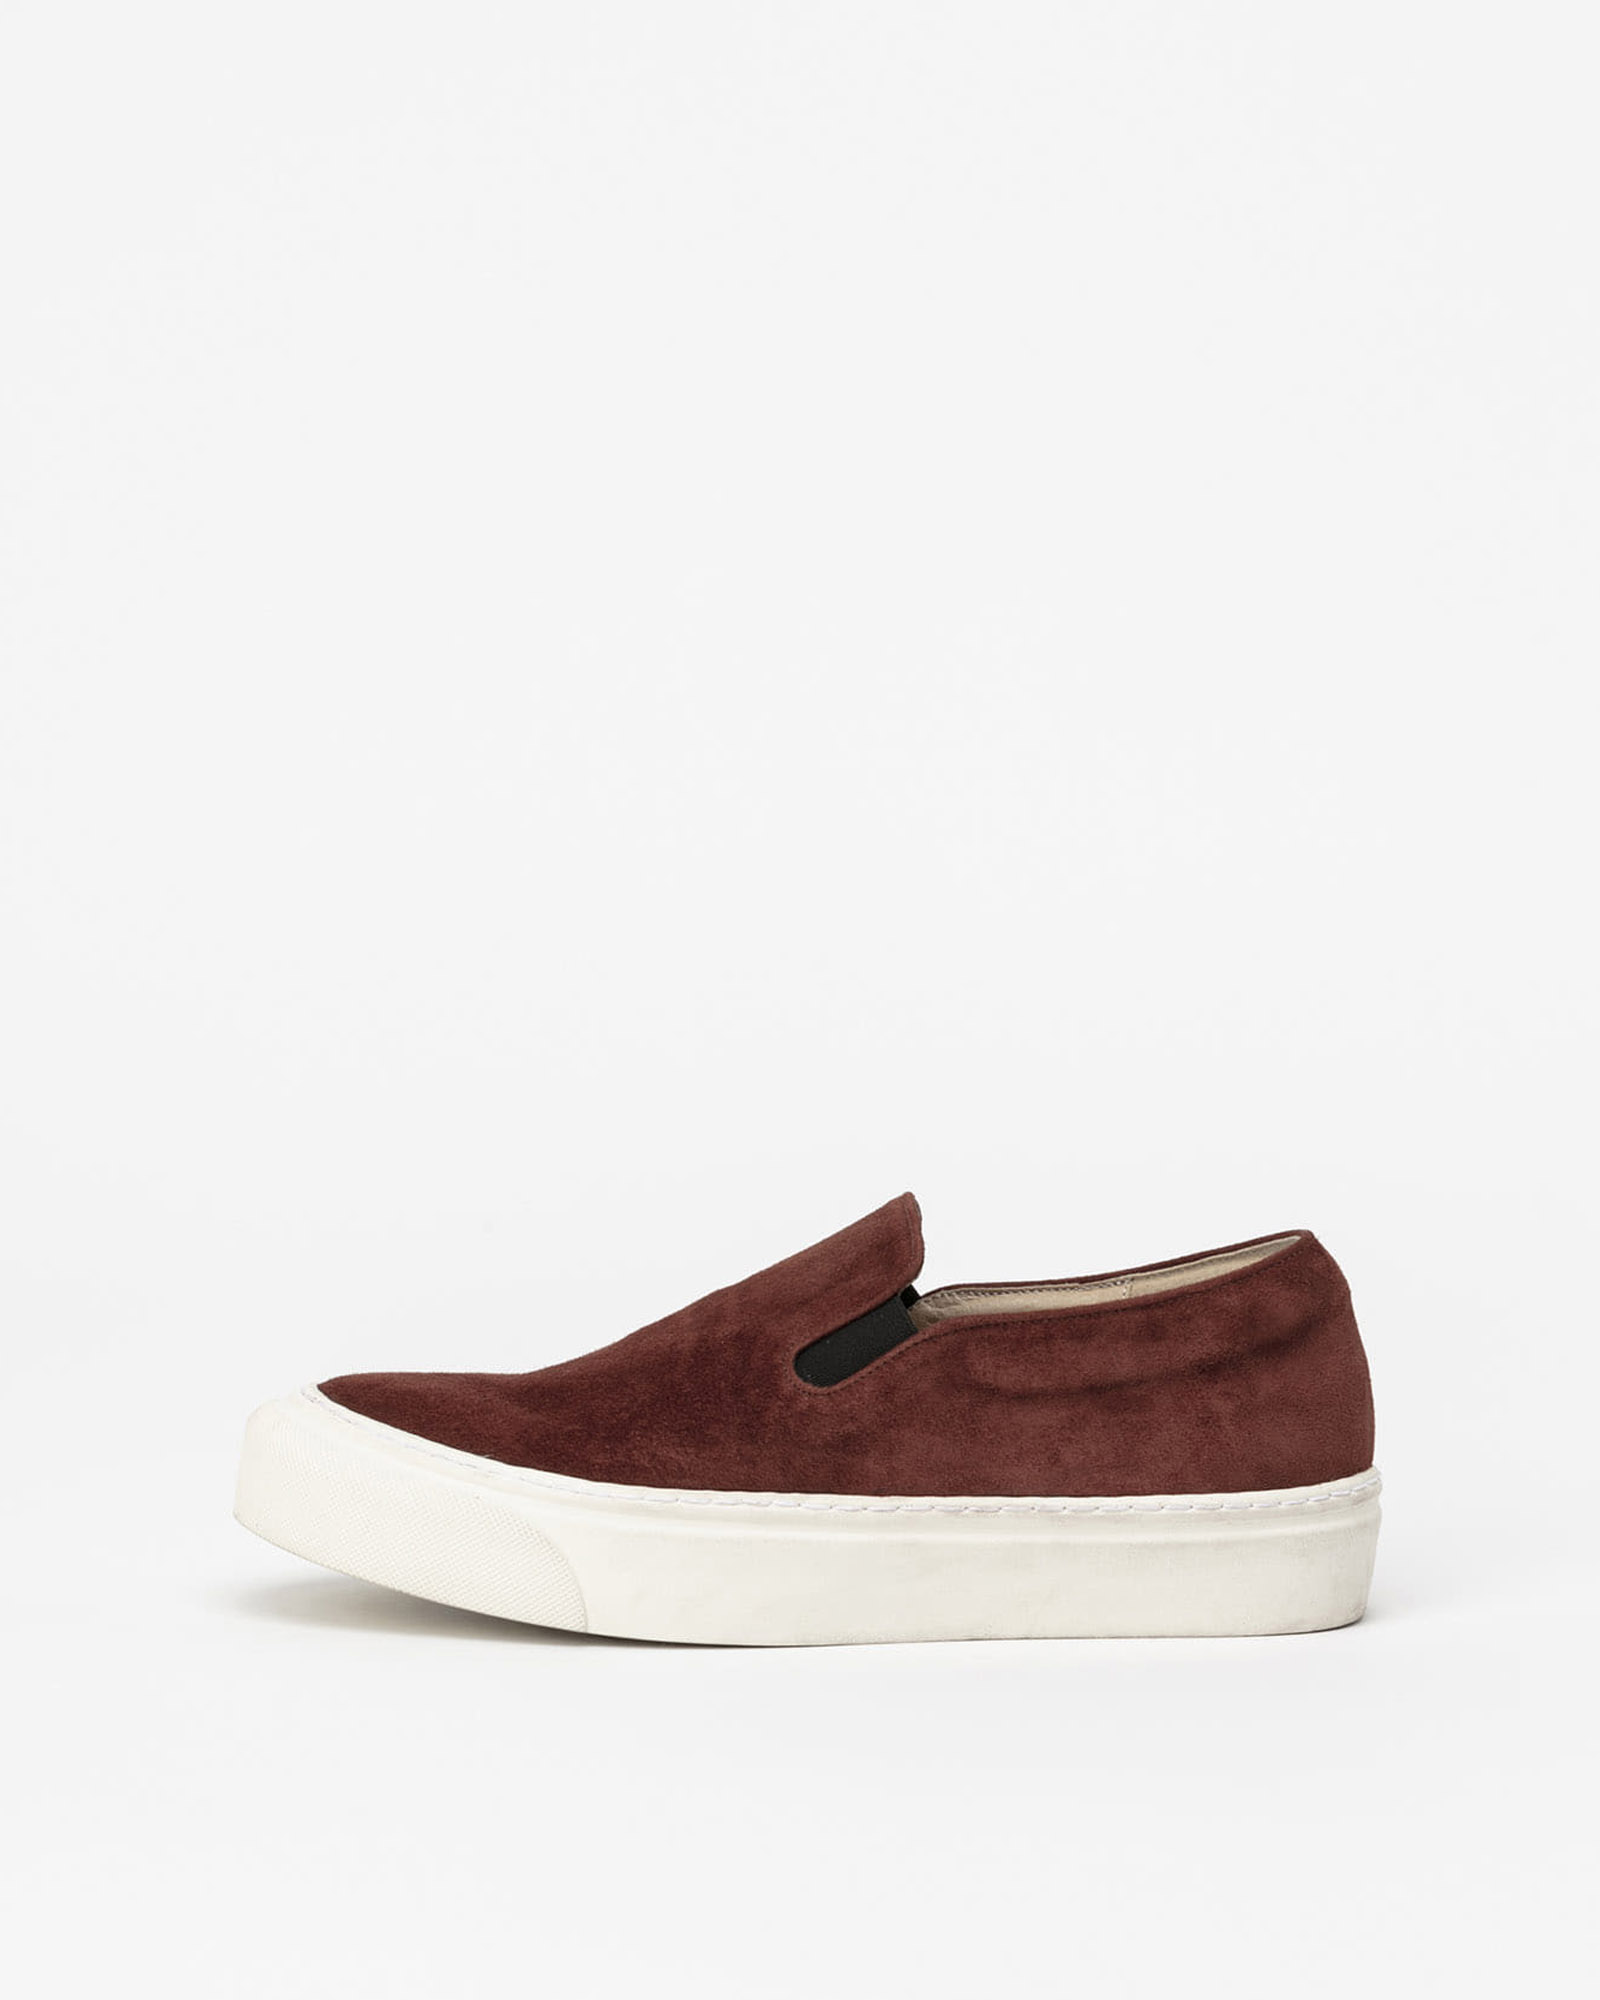 Palo Slip-on Sneakers in Chestnut Brown Suede